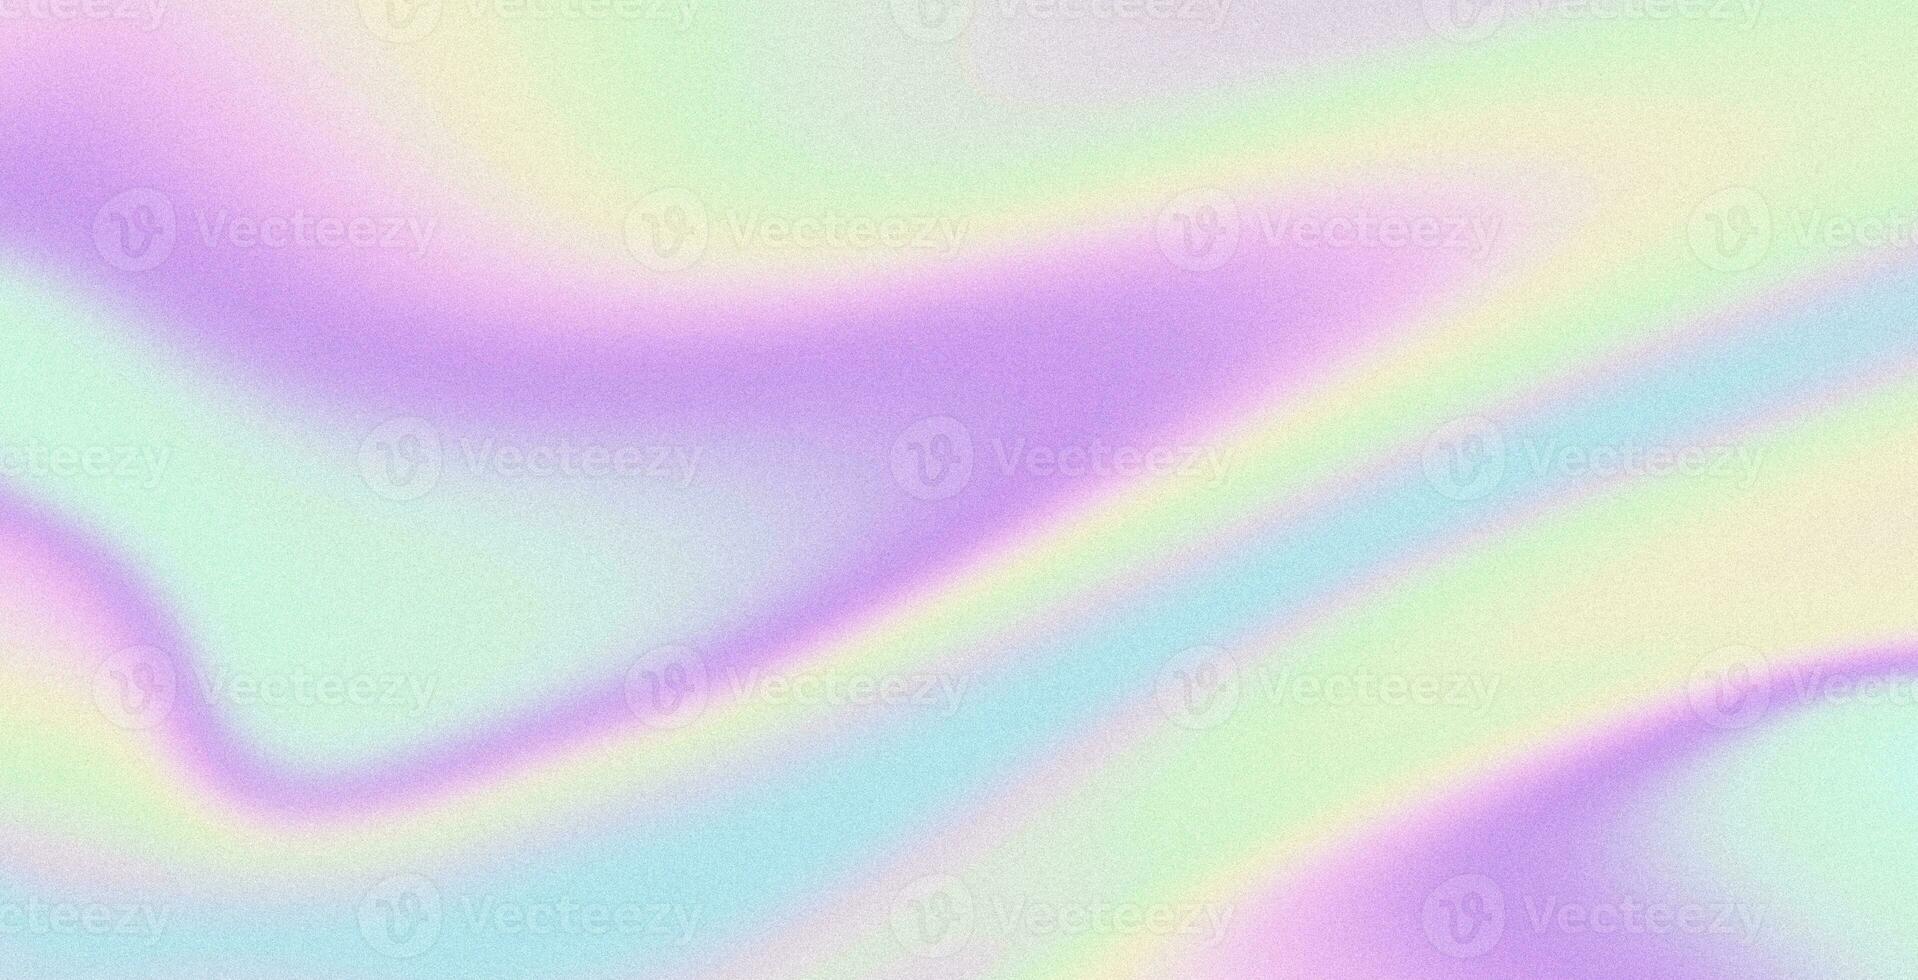 Purper geel blauw iriserend vloeistof holografische korrelig achtergrond lawaai structuur effect foto